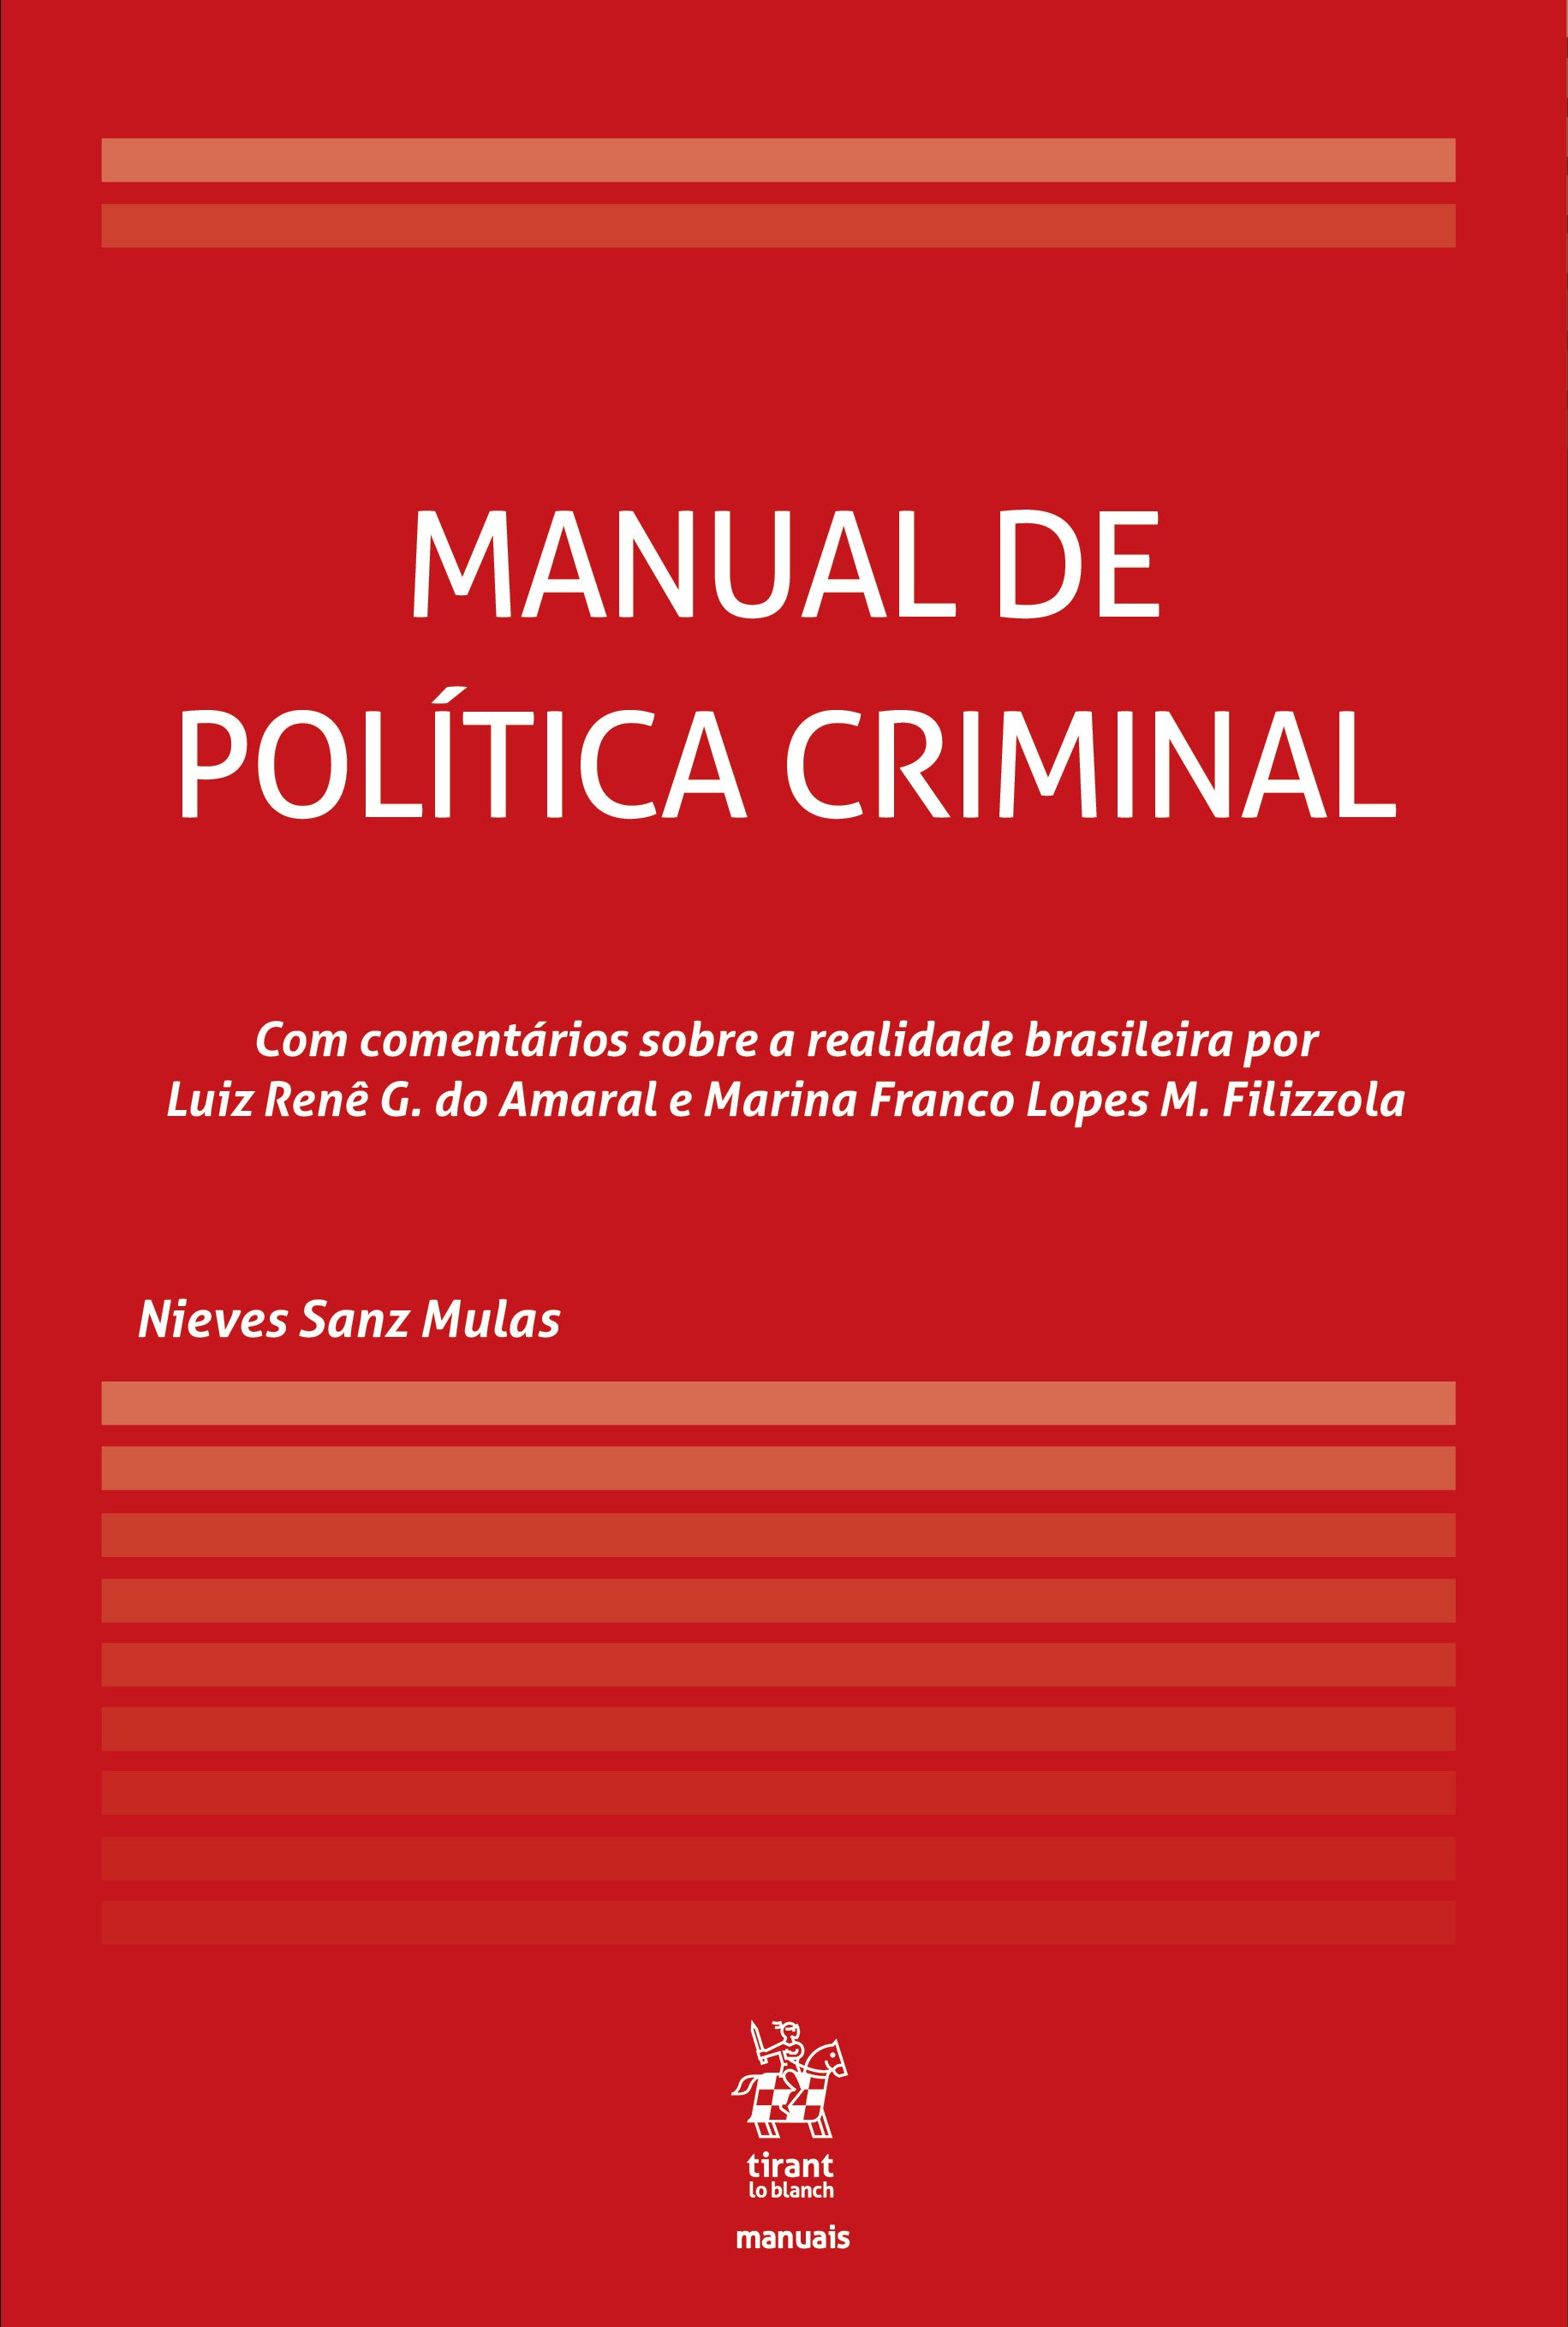 Imagen de portada del libro Manual de política criminal